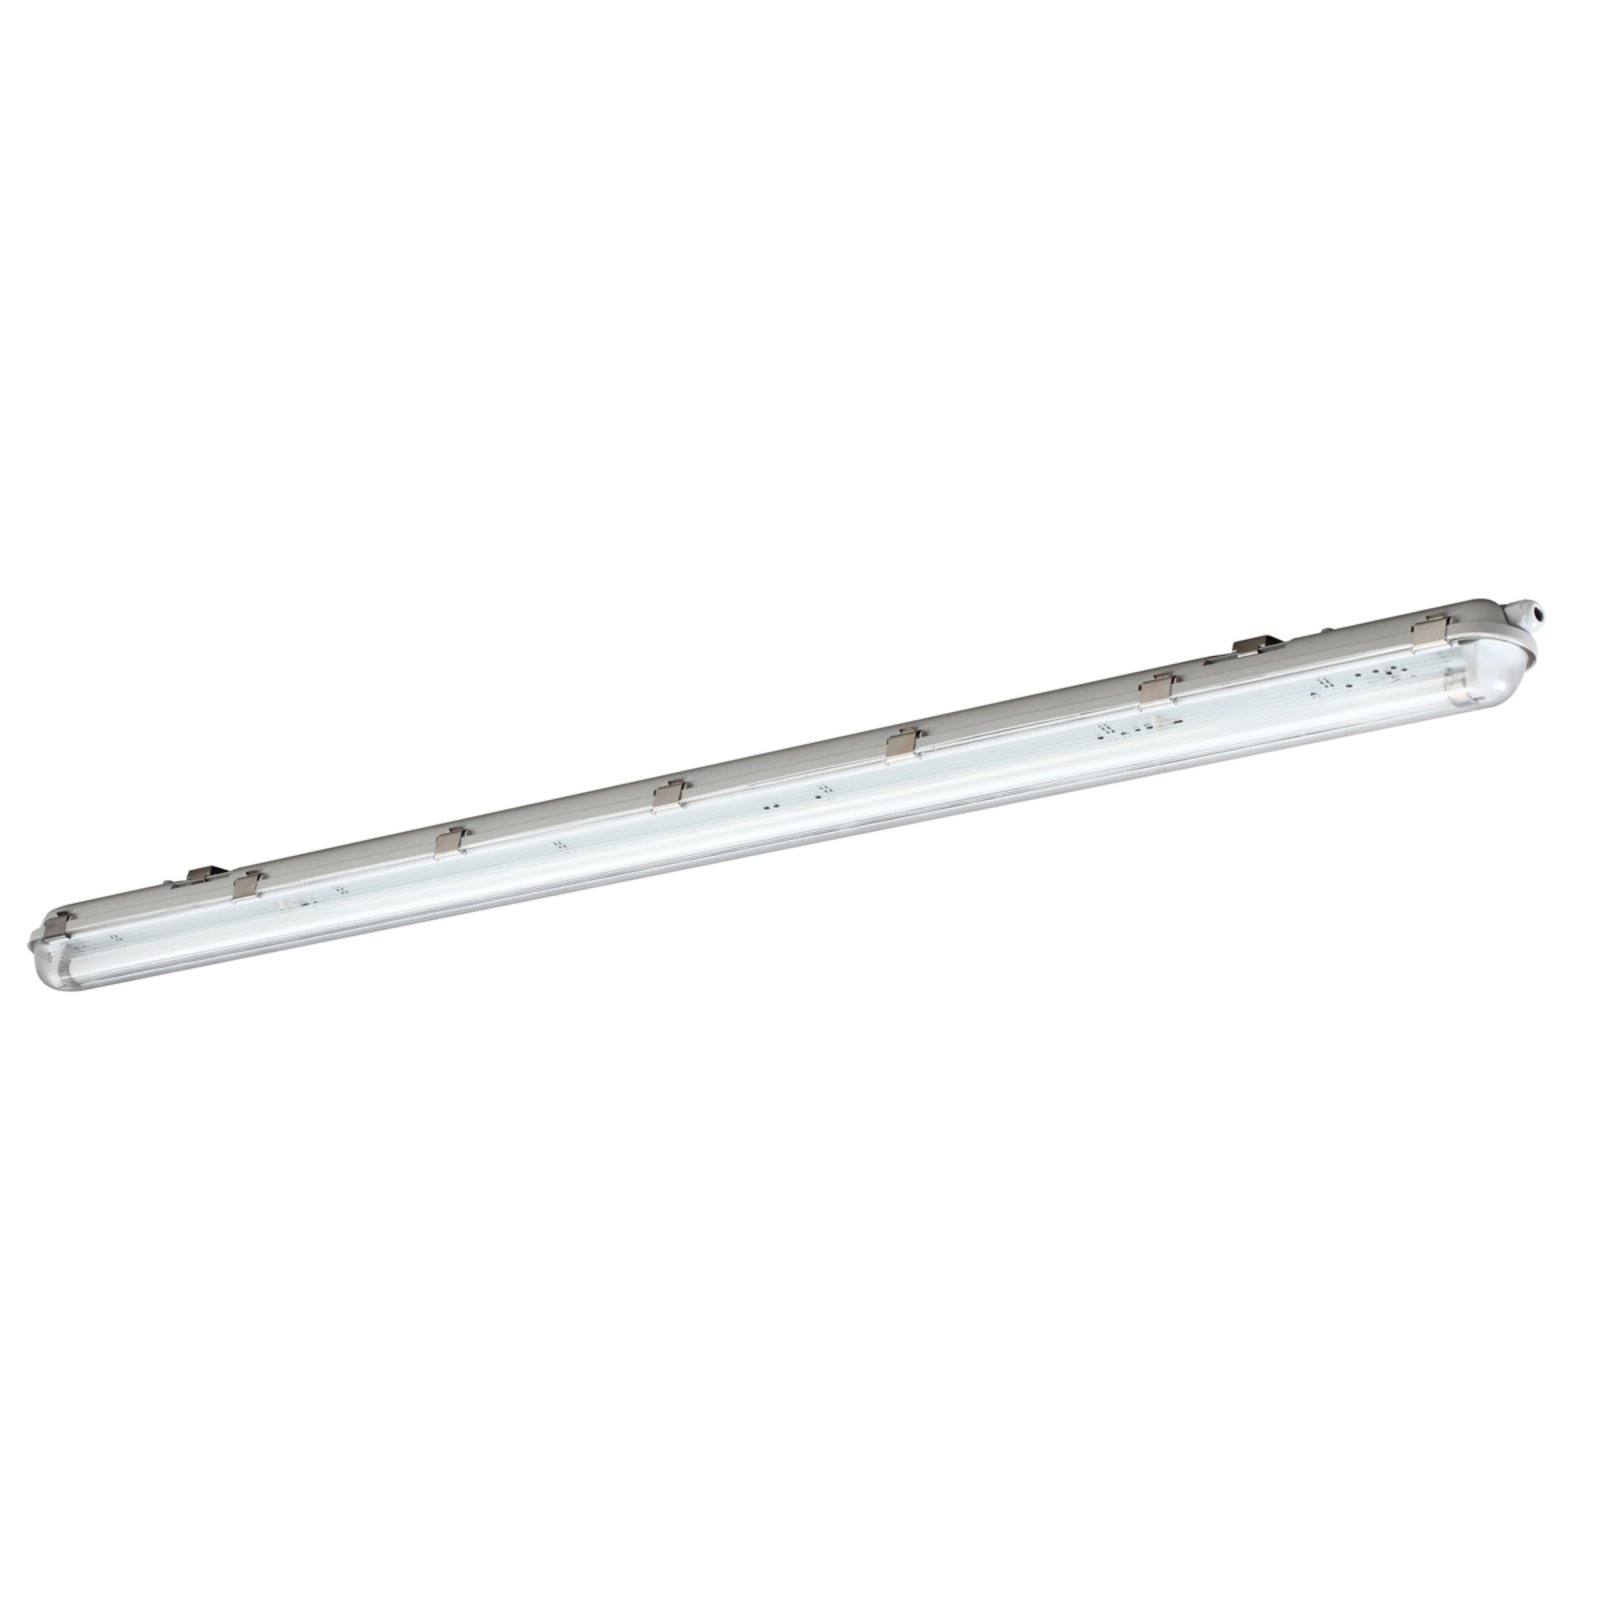 Aquaslim LED moisture-proof light for damp rooms, length 150 cm